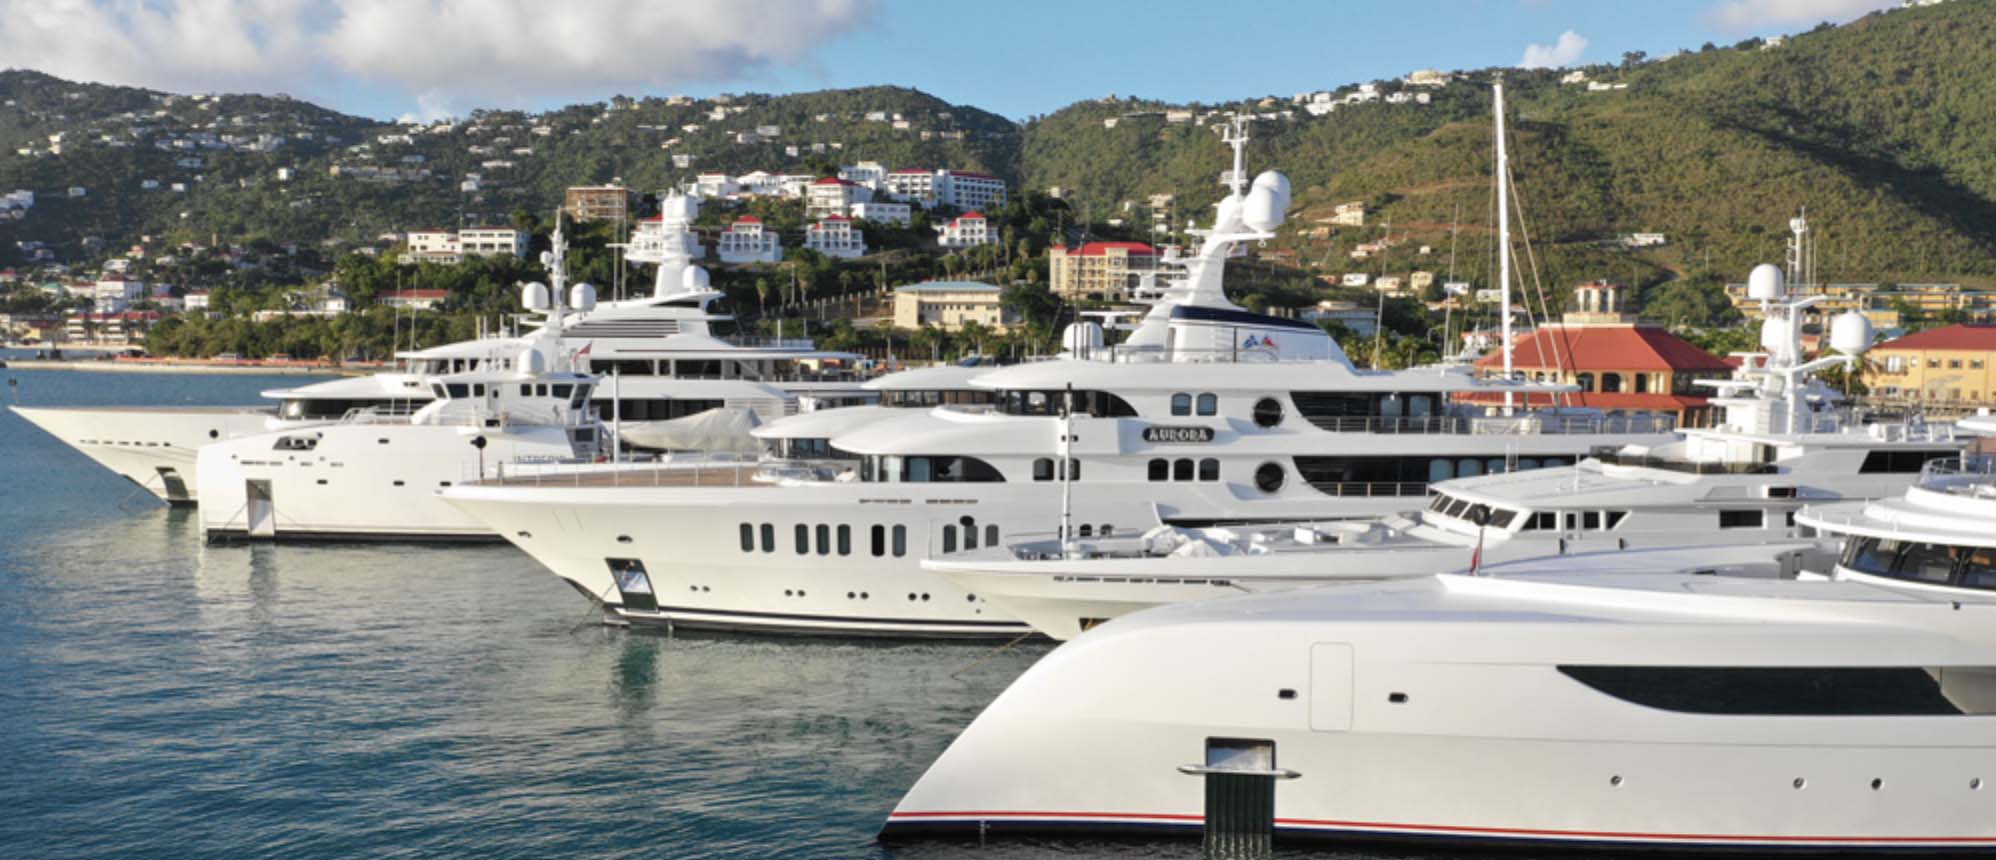 Caribbean Charter Yacht Show